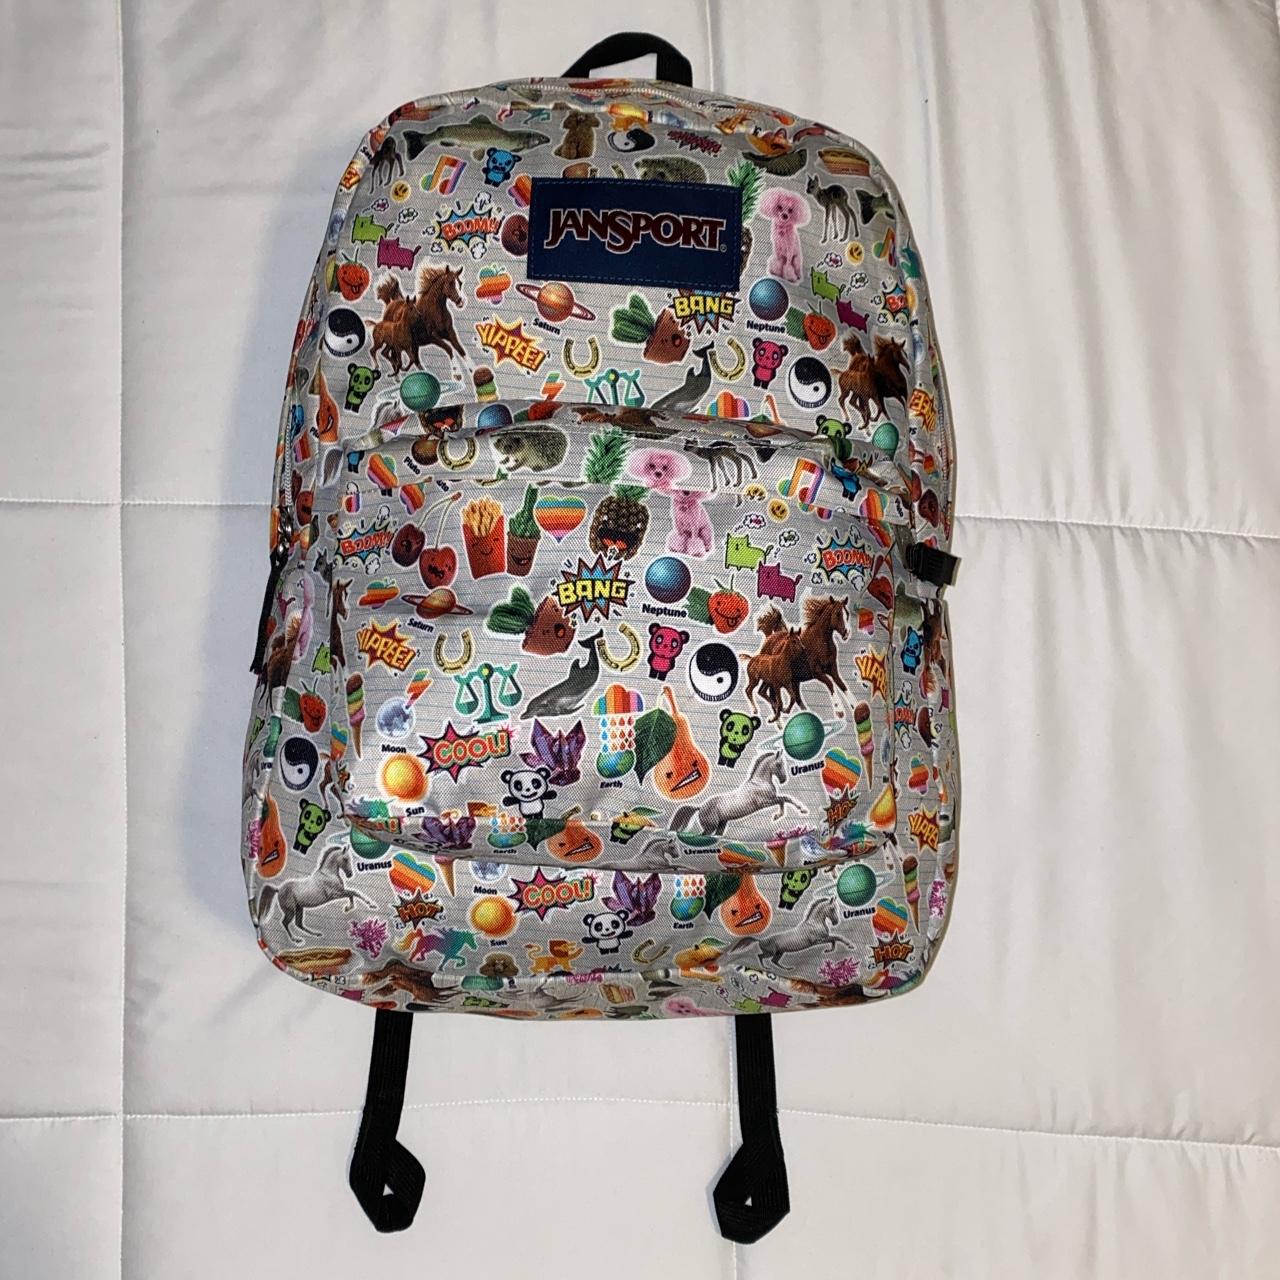 Vintage authentic supreme backpack purchased on - Depop